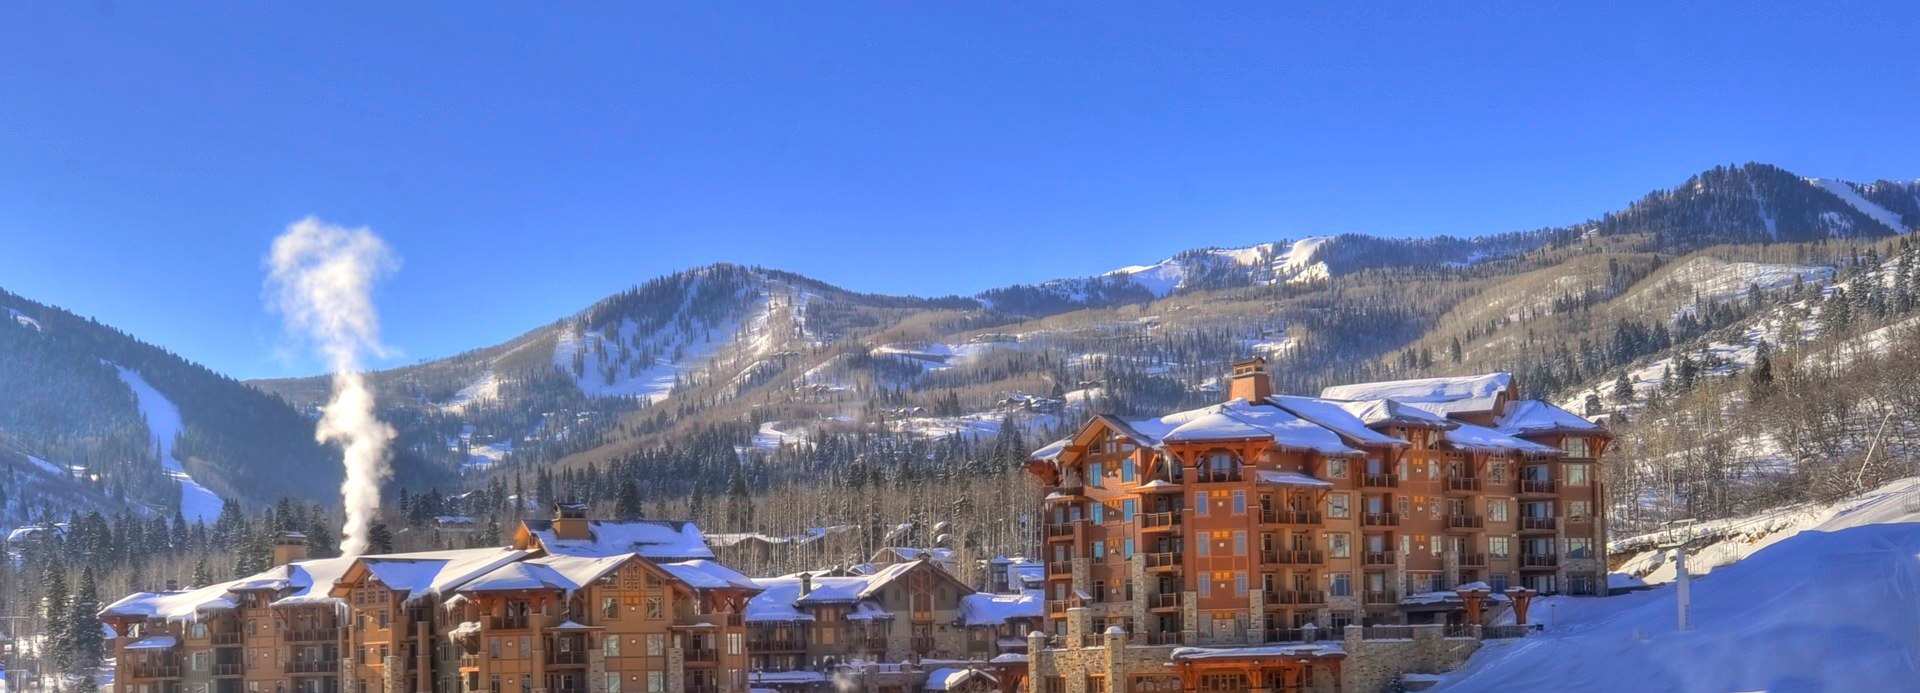 Property with ski resort in rear